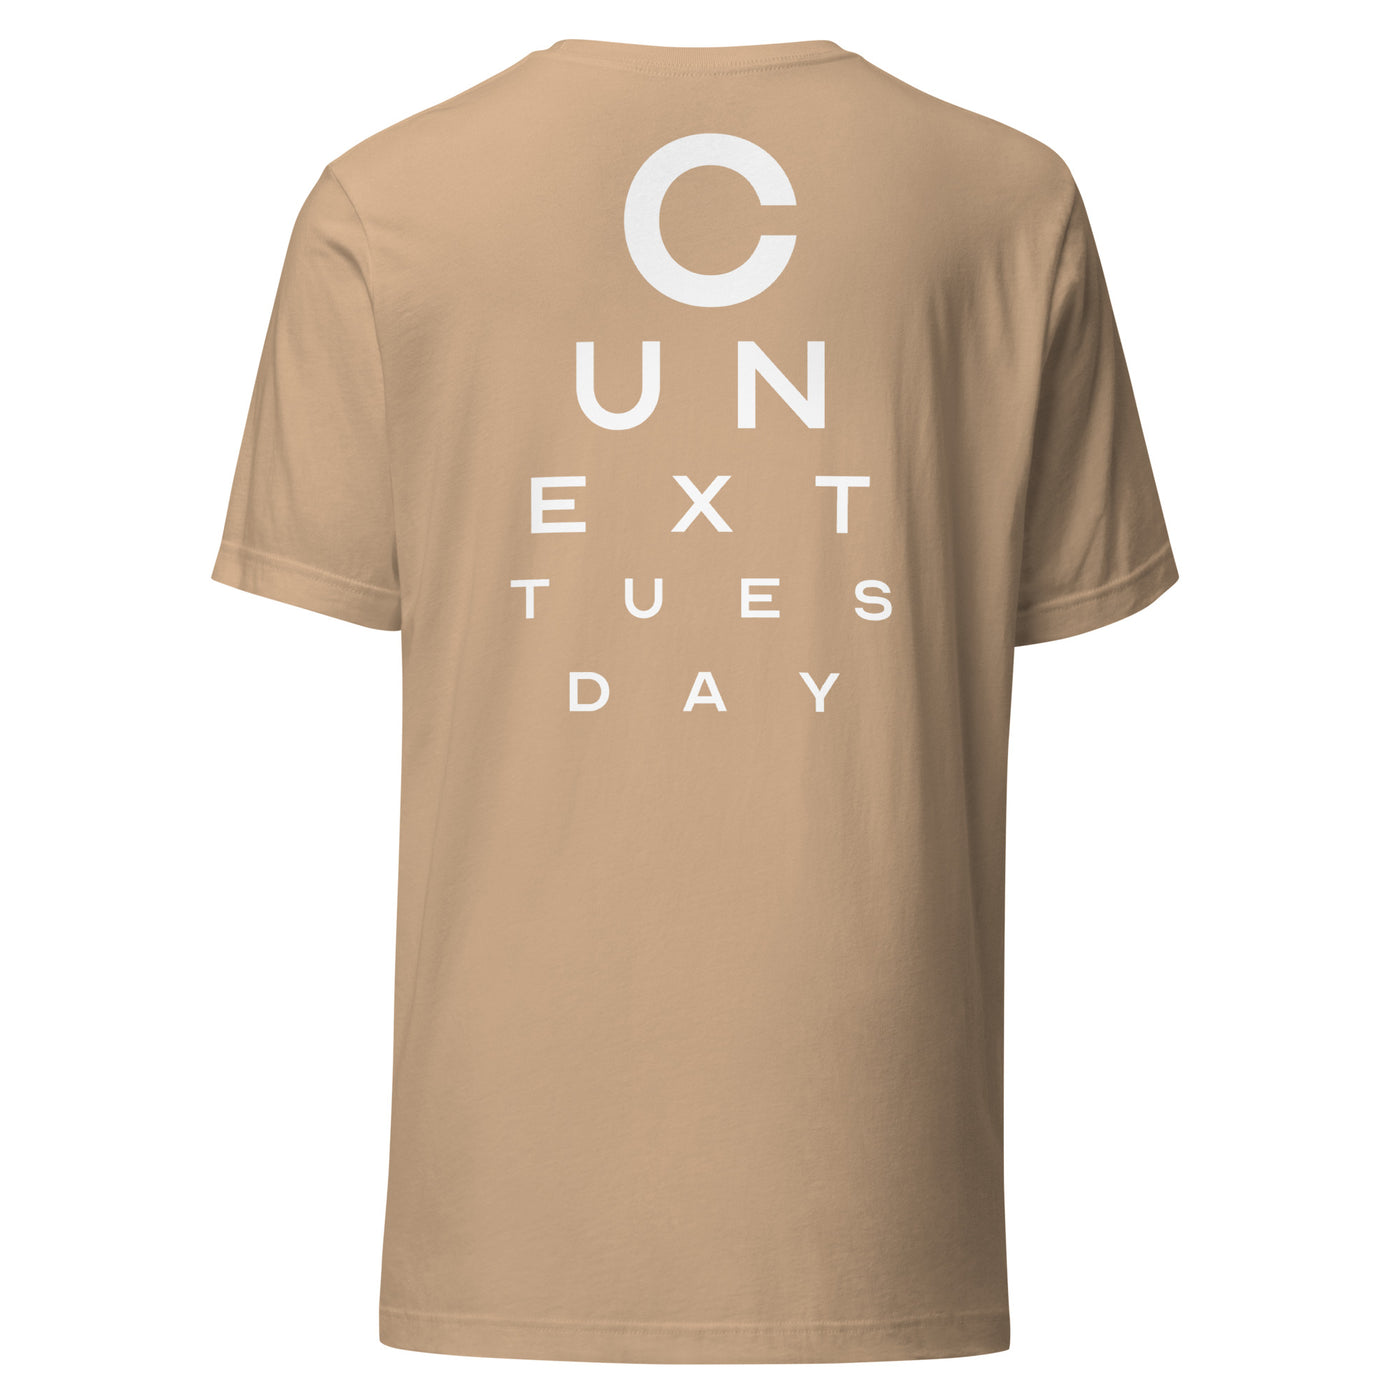 C U NEXT TUESDAY T-Shirt Scotland Edition